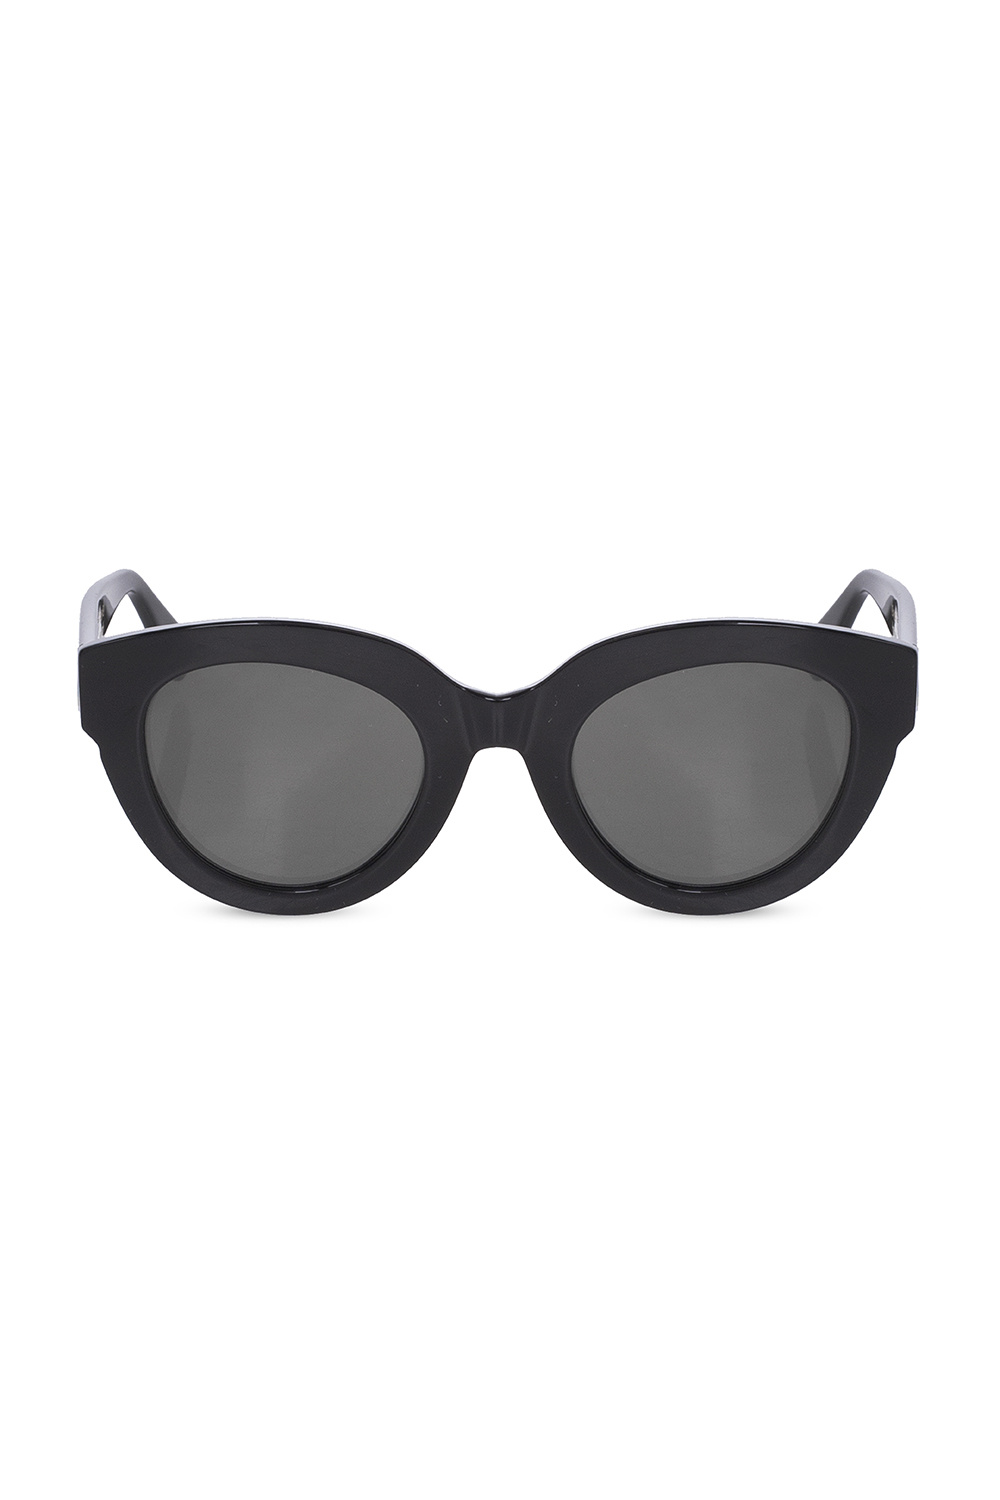 Emmanuelle Khanh Brown sunglasses with logo